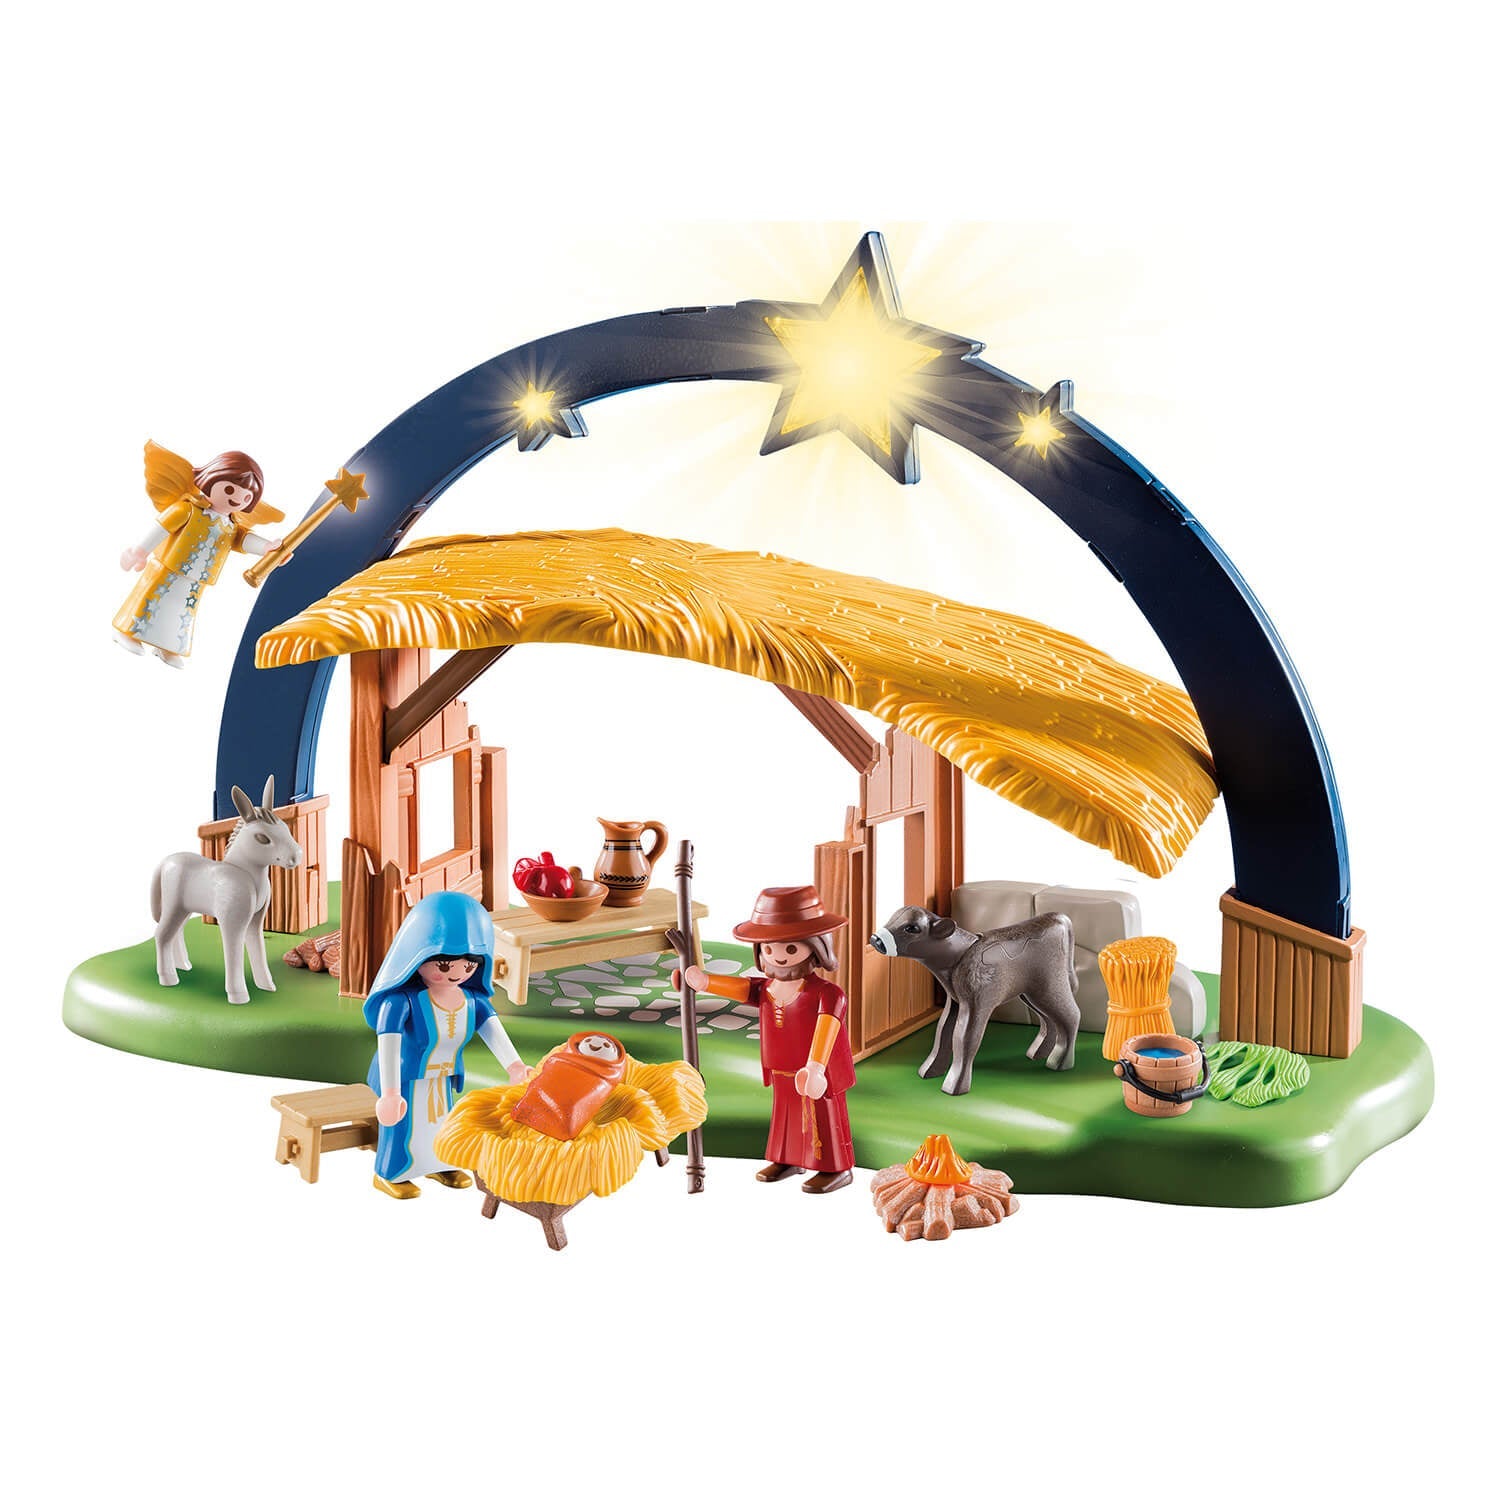 PLAYMOBIL Christmas Illuminating Nativity Manger (9494)